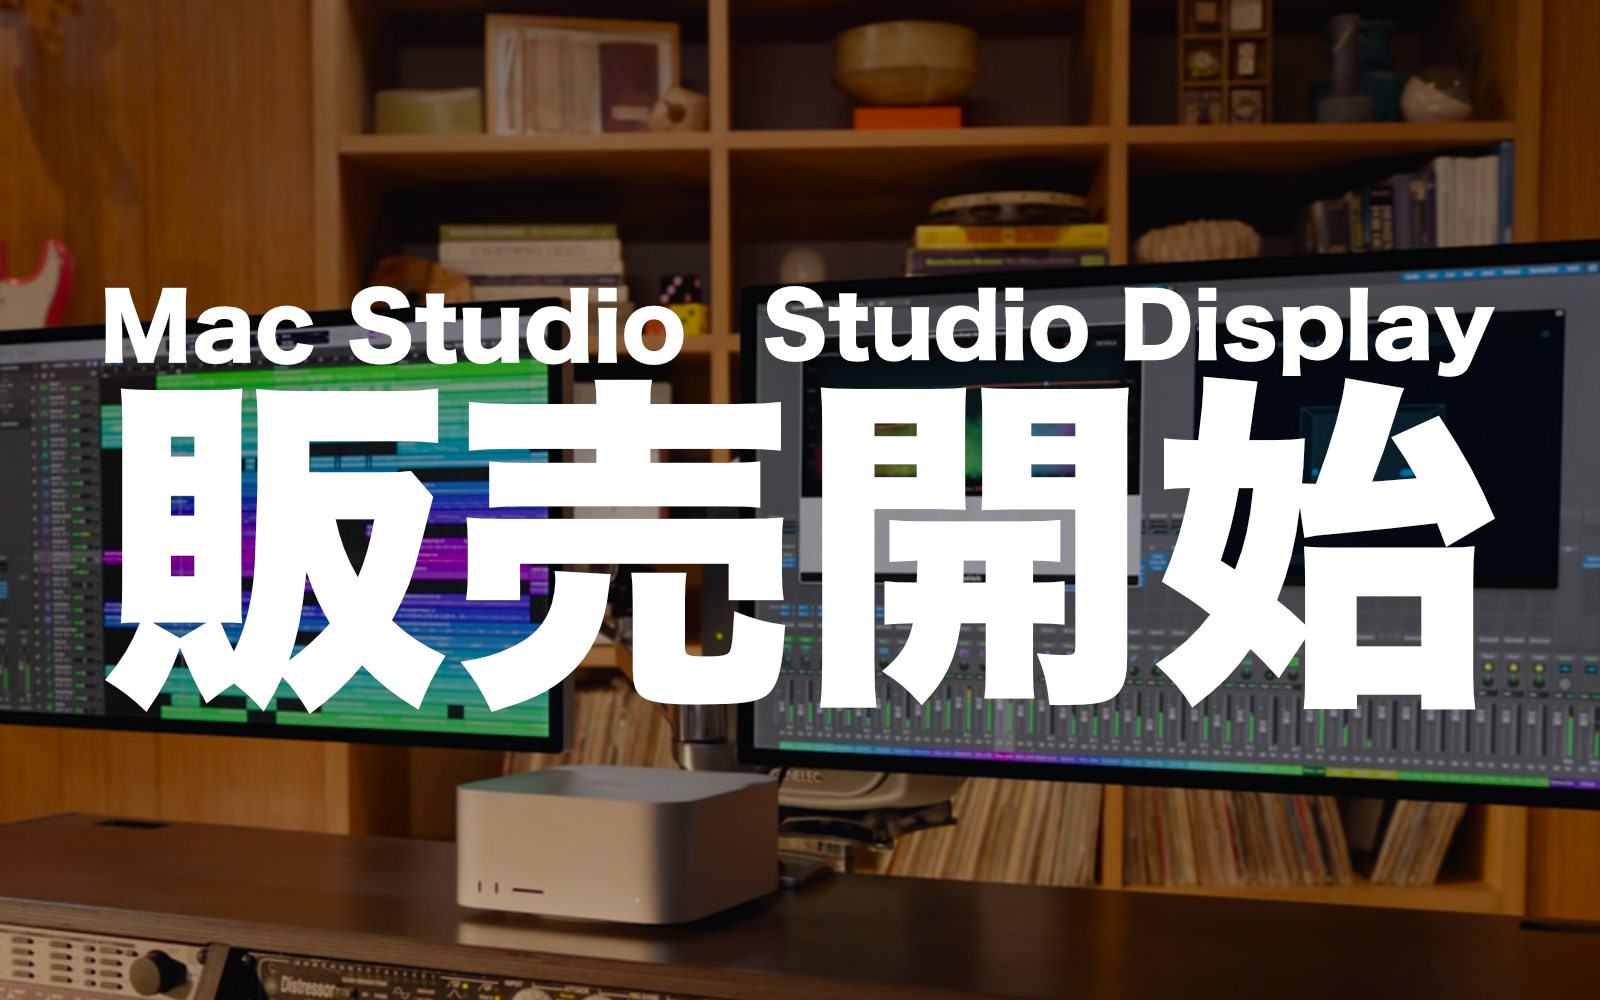 MacStudio and StudioDisplay now on sale